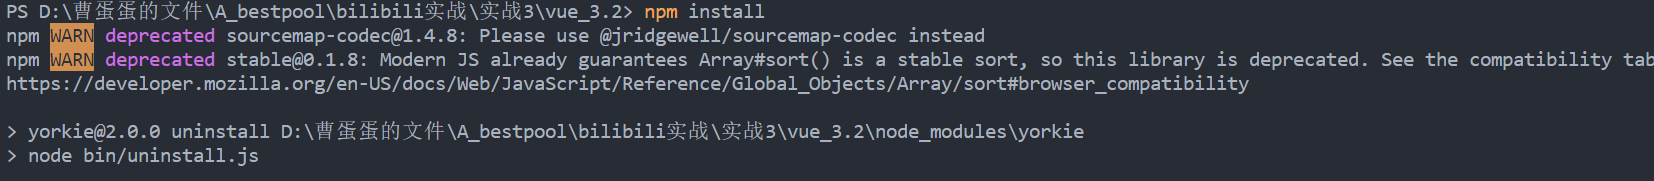 npm ERR! code E404 在vscode安装插件时报错的解决方案